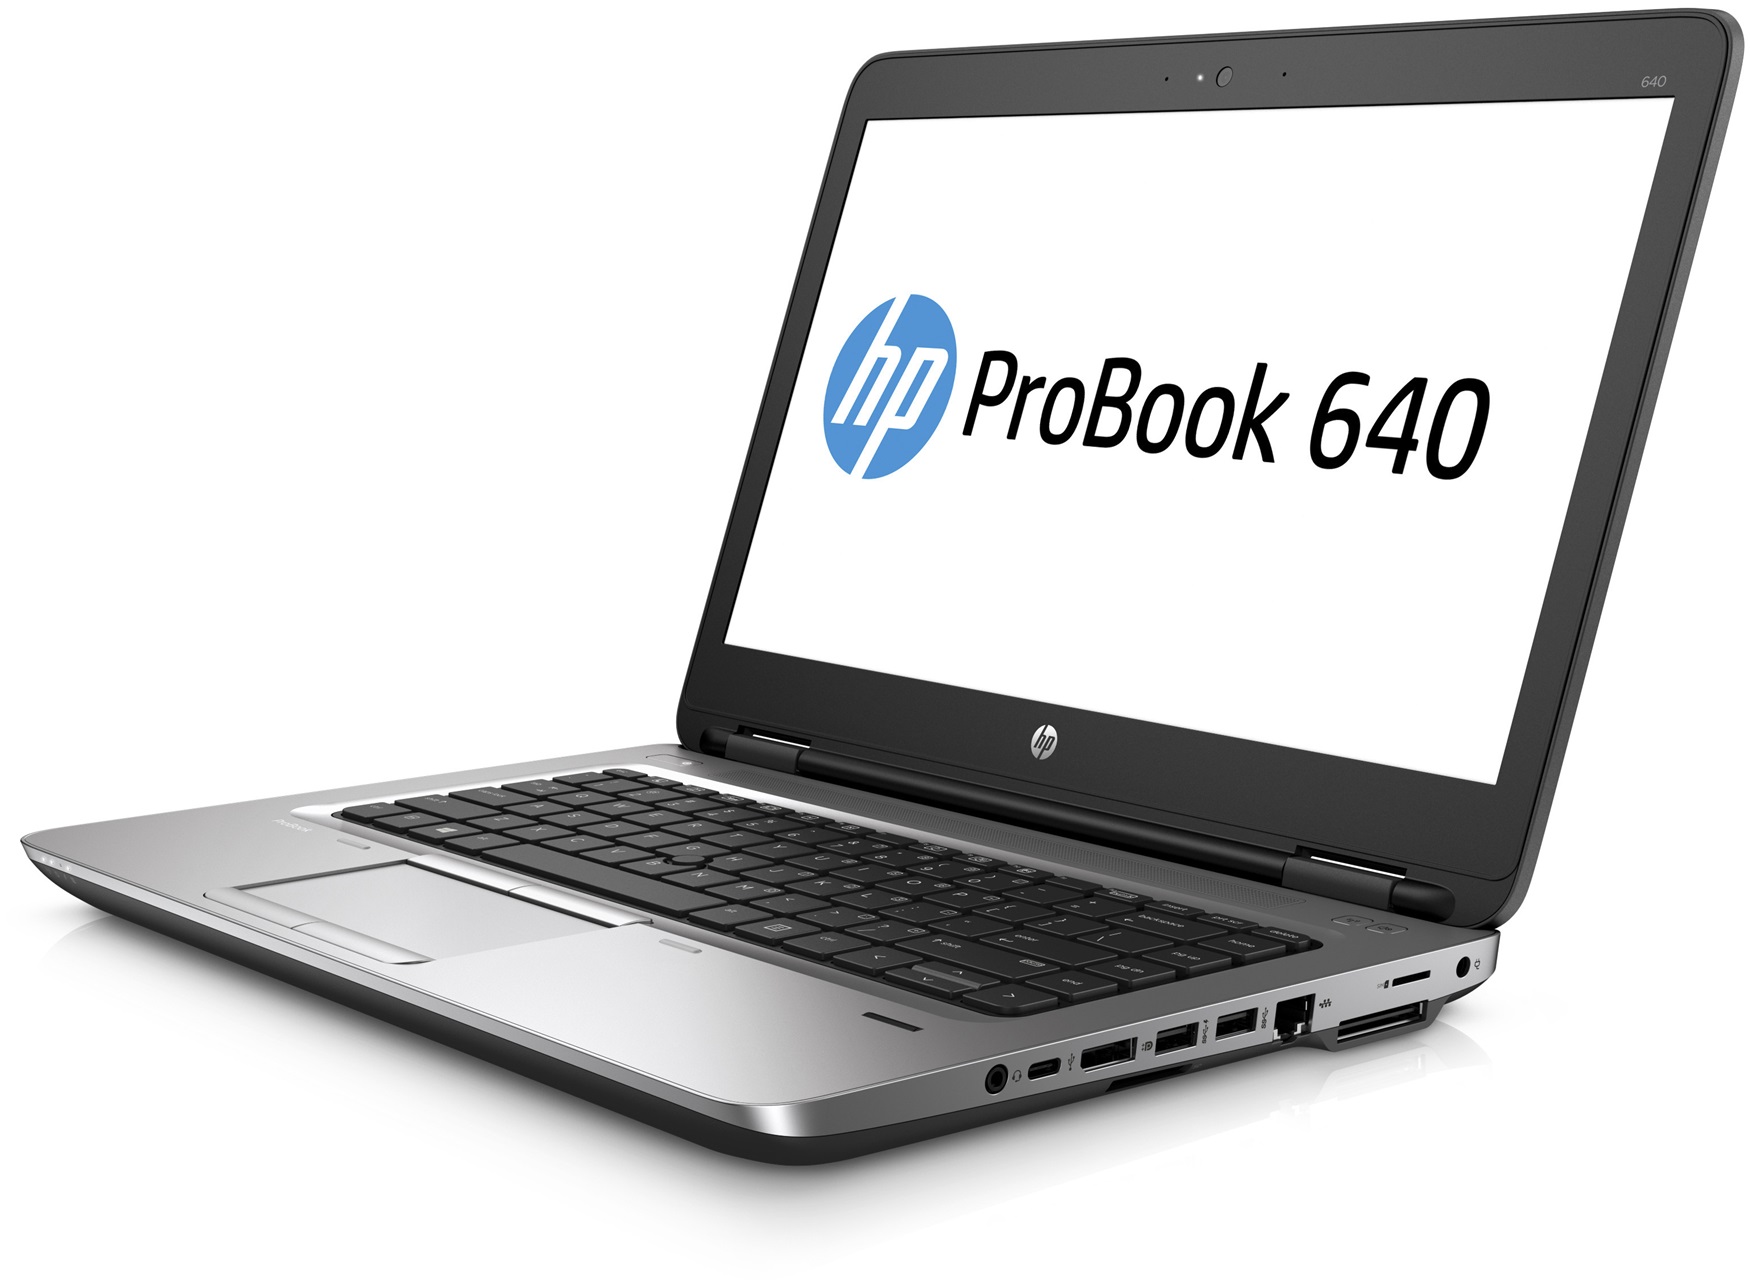 Portátil HP Probook 640 G2 GRADO B (Intel Core i5 6200U 2.3Ghz/8GB/240SSD/14FHD/NO-DVD/W10P) Preinstalado